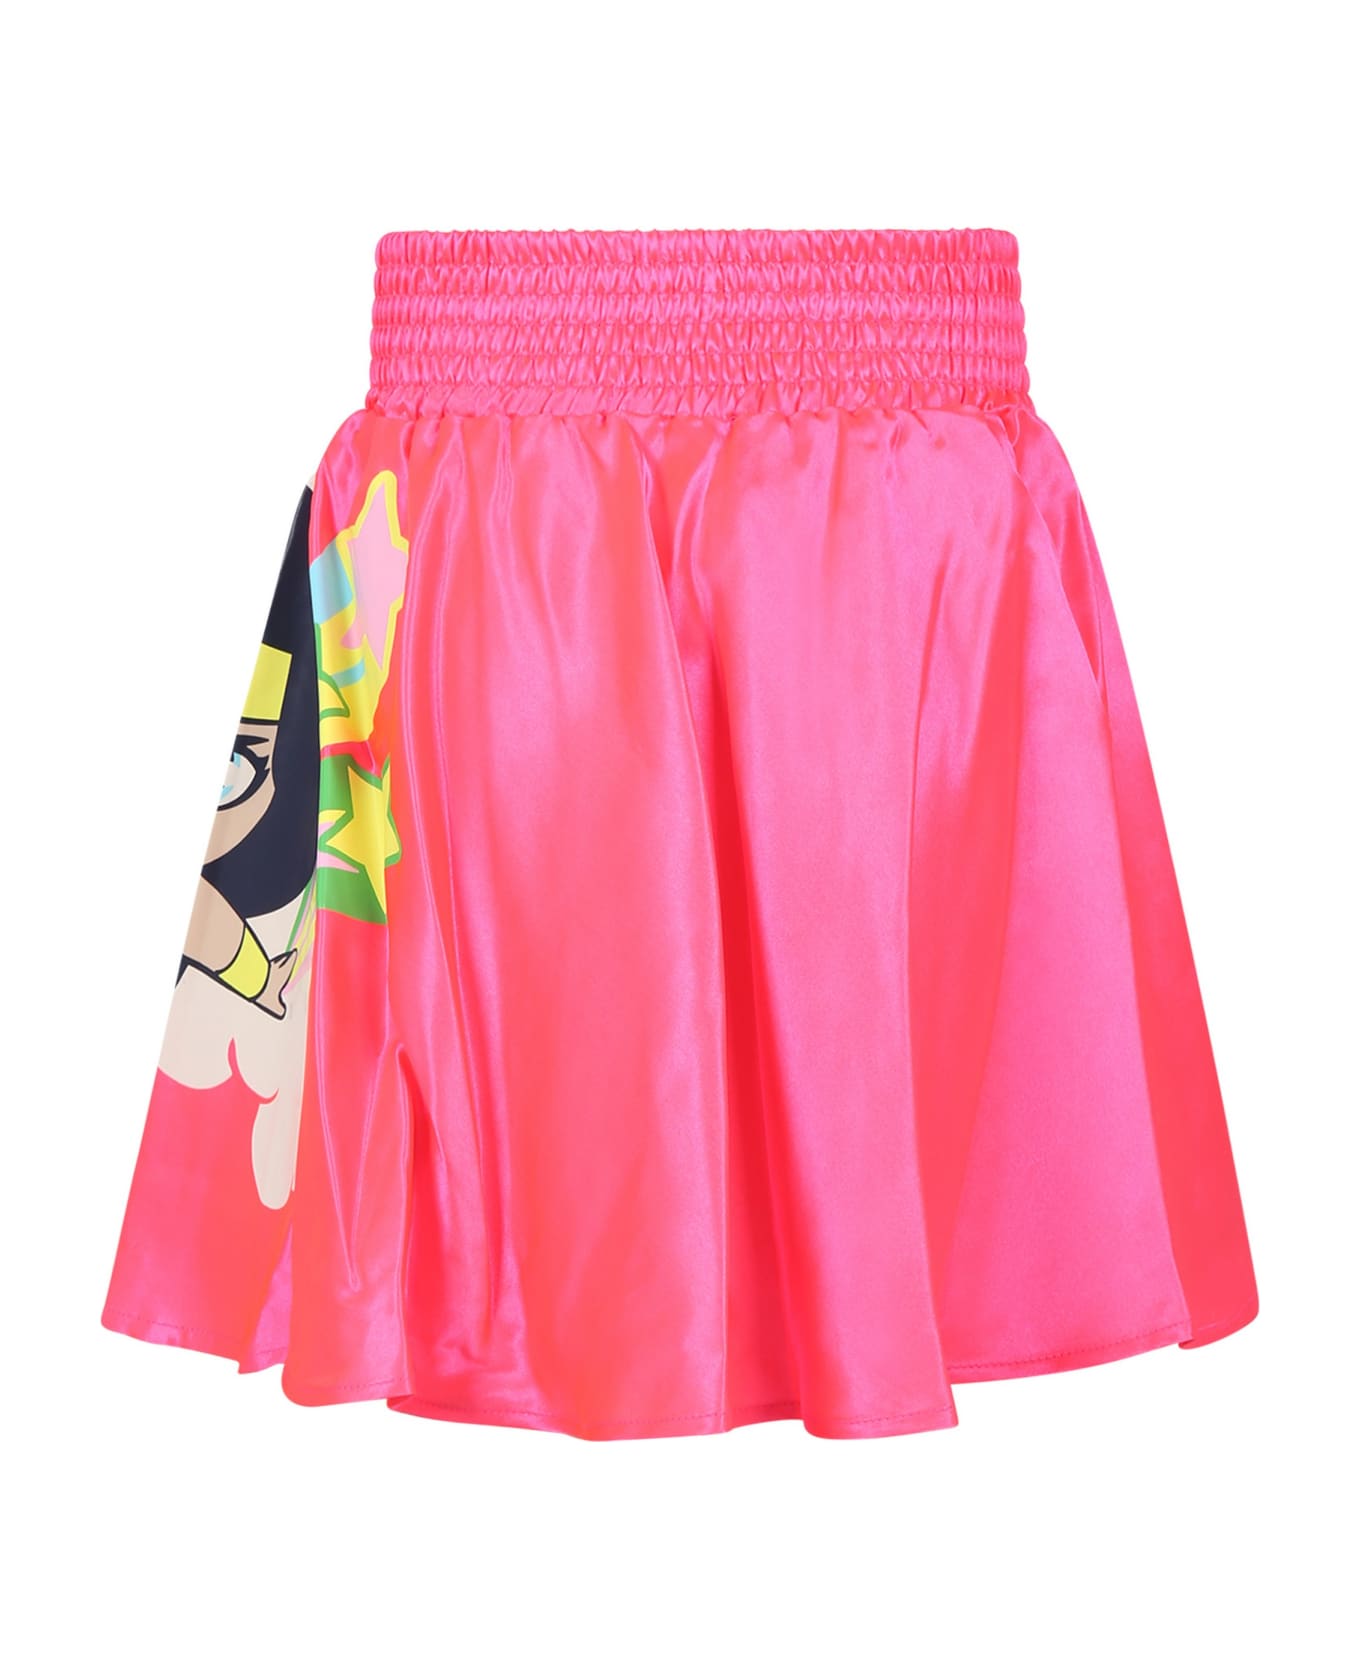 Billieblush Fuchsia Skirt For Girl With Wonder Woman - Fuchsia